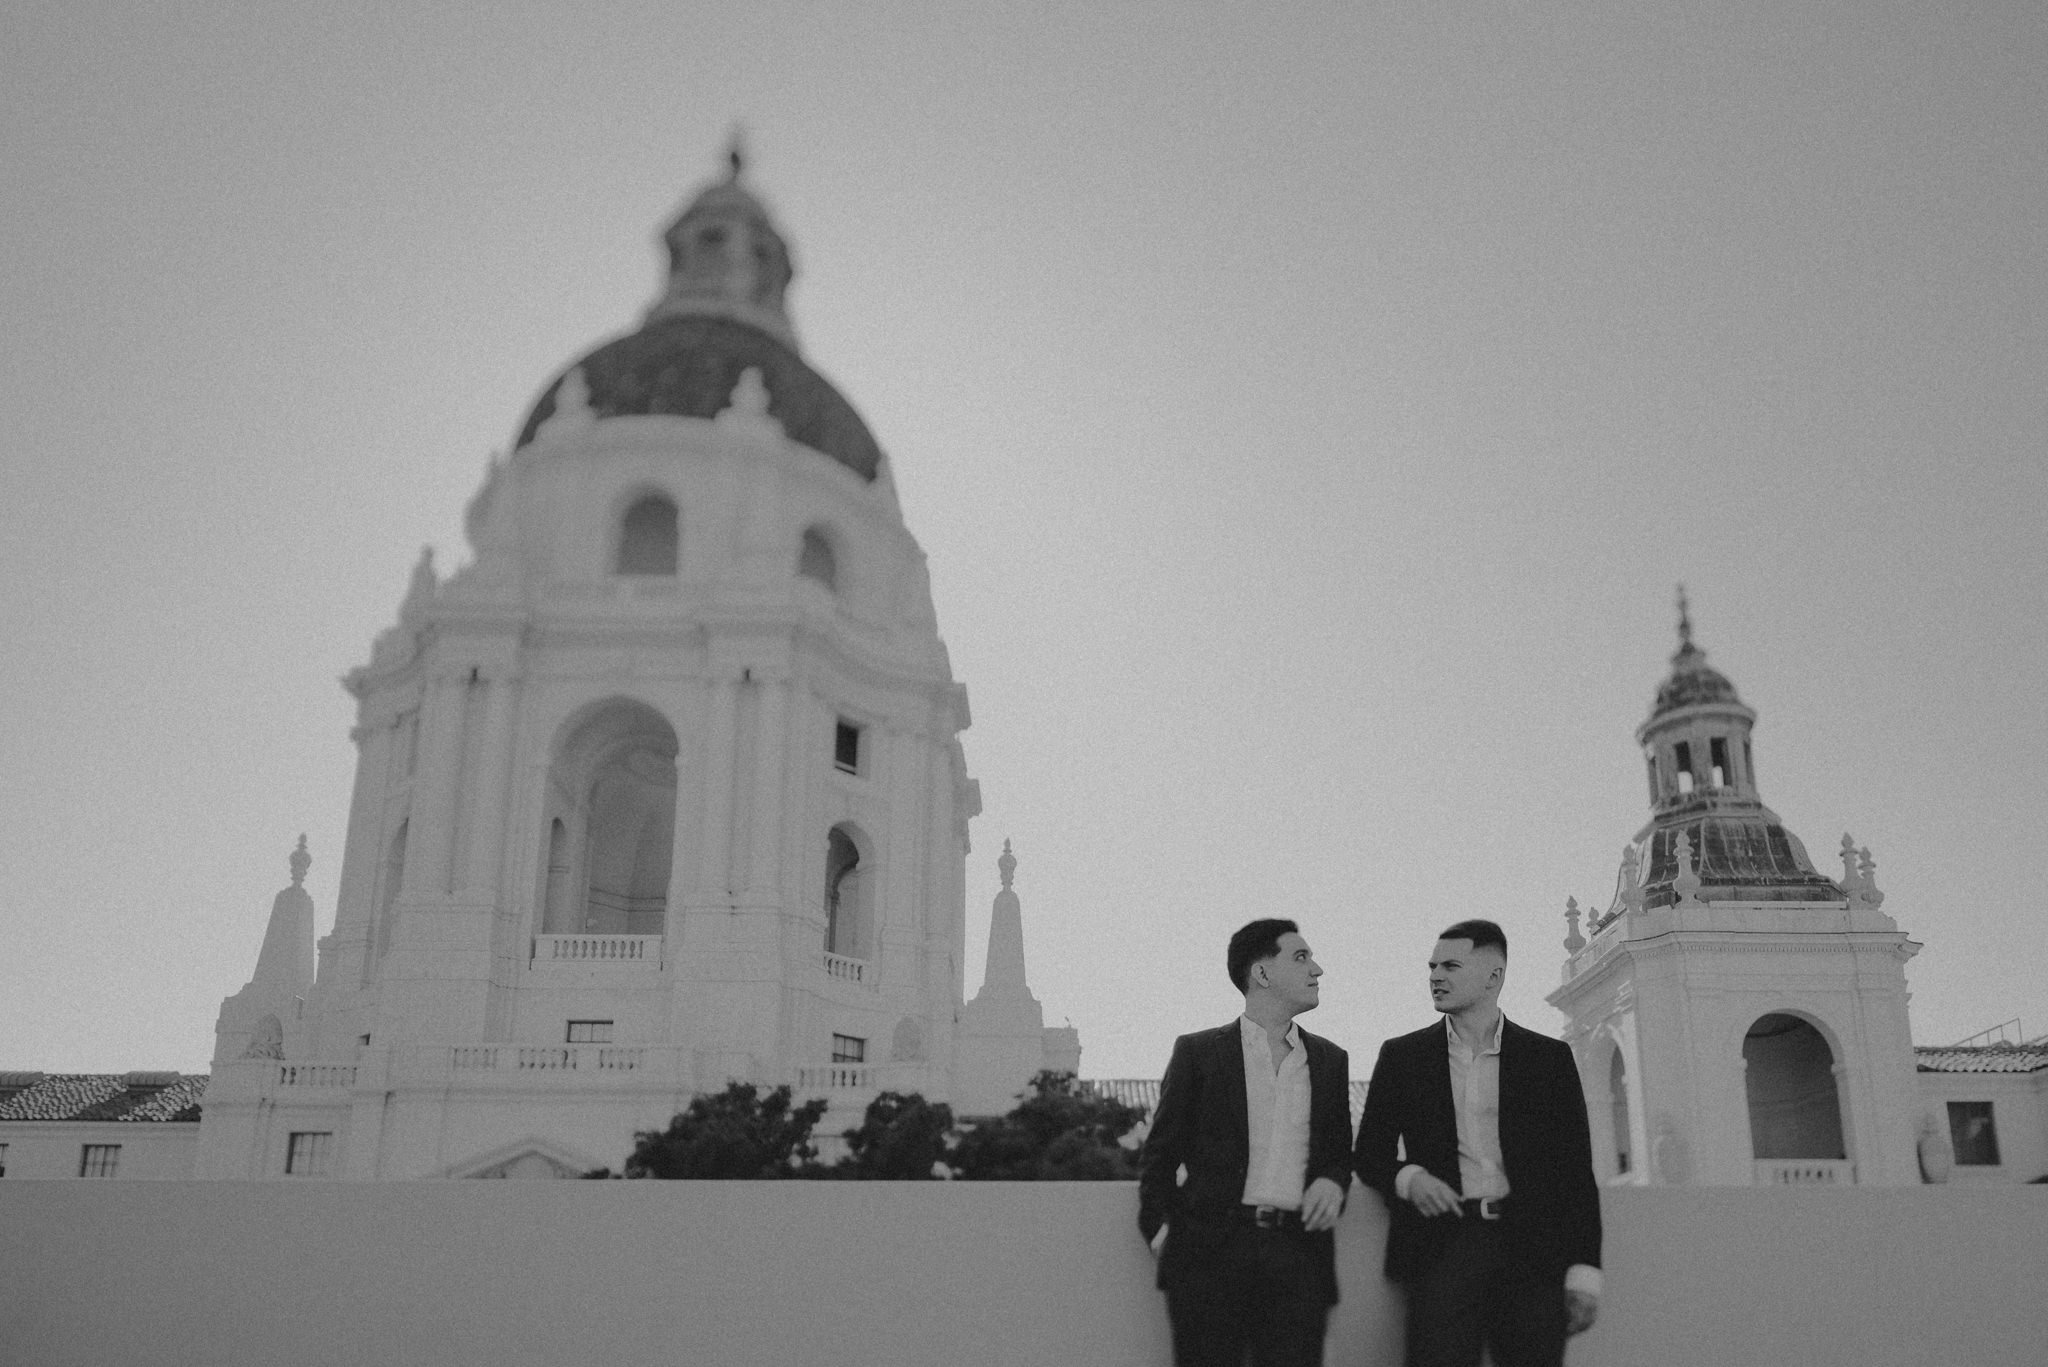 gay wedding photograpers in los angeles - lgbtq wedding vendors la - gay men engagement photos - itlaphoto.com-22.jpg